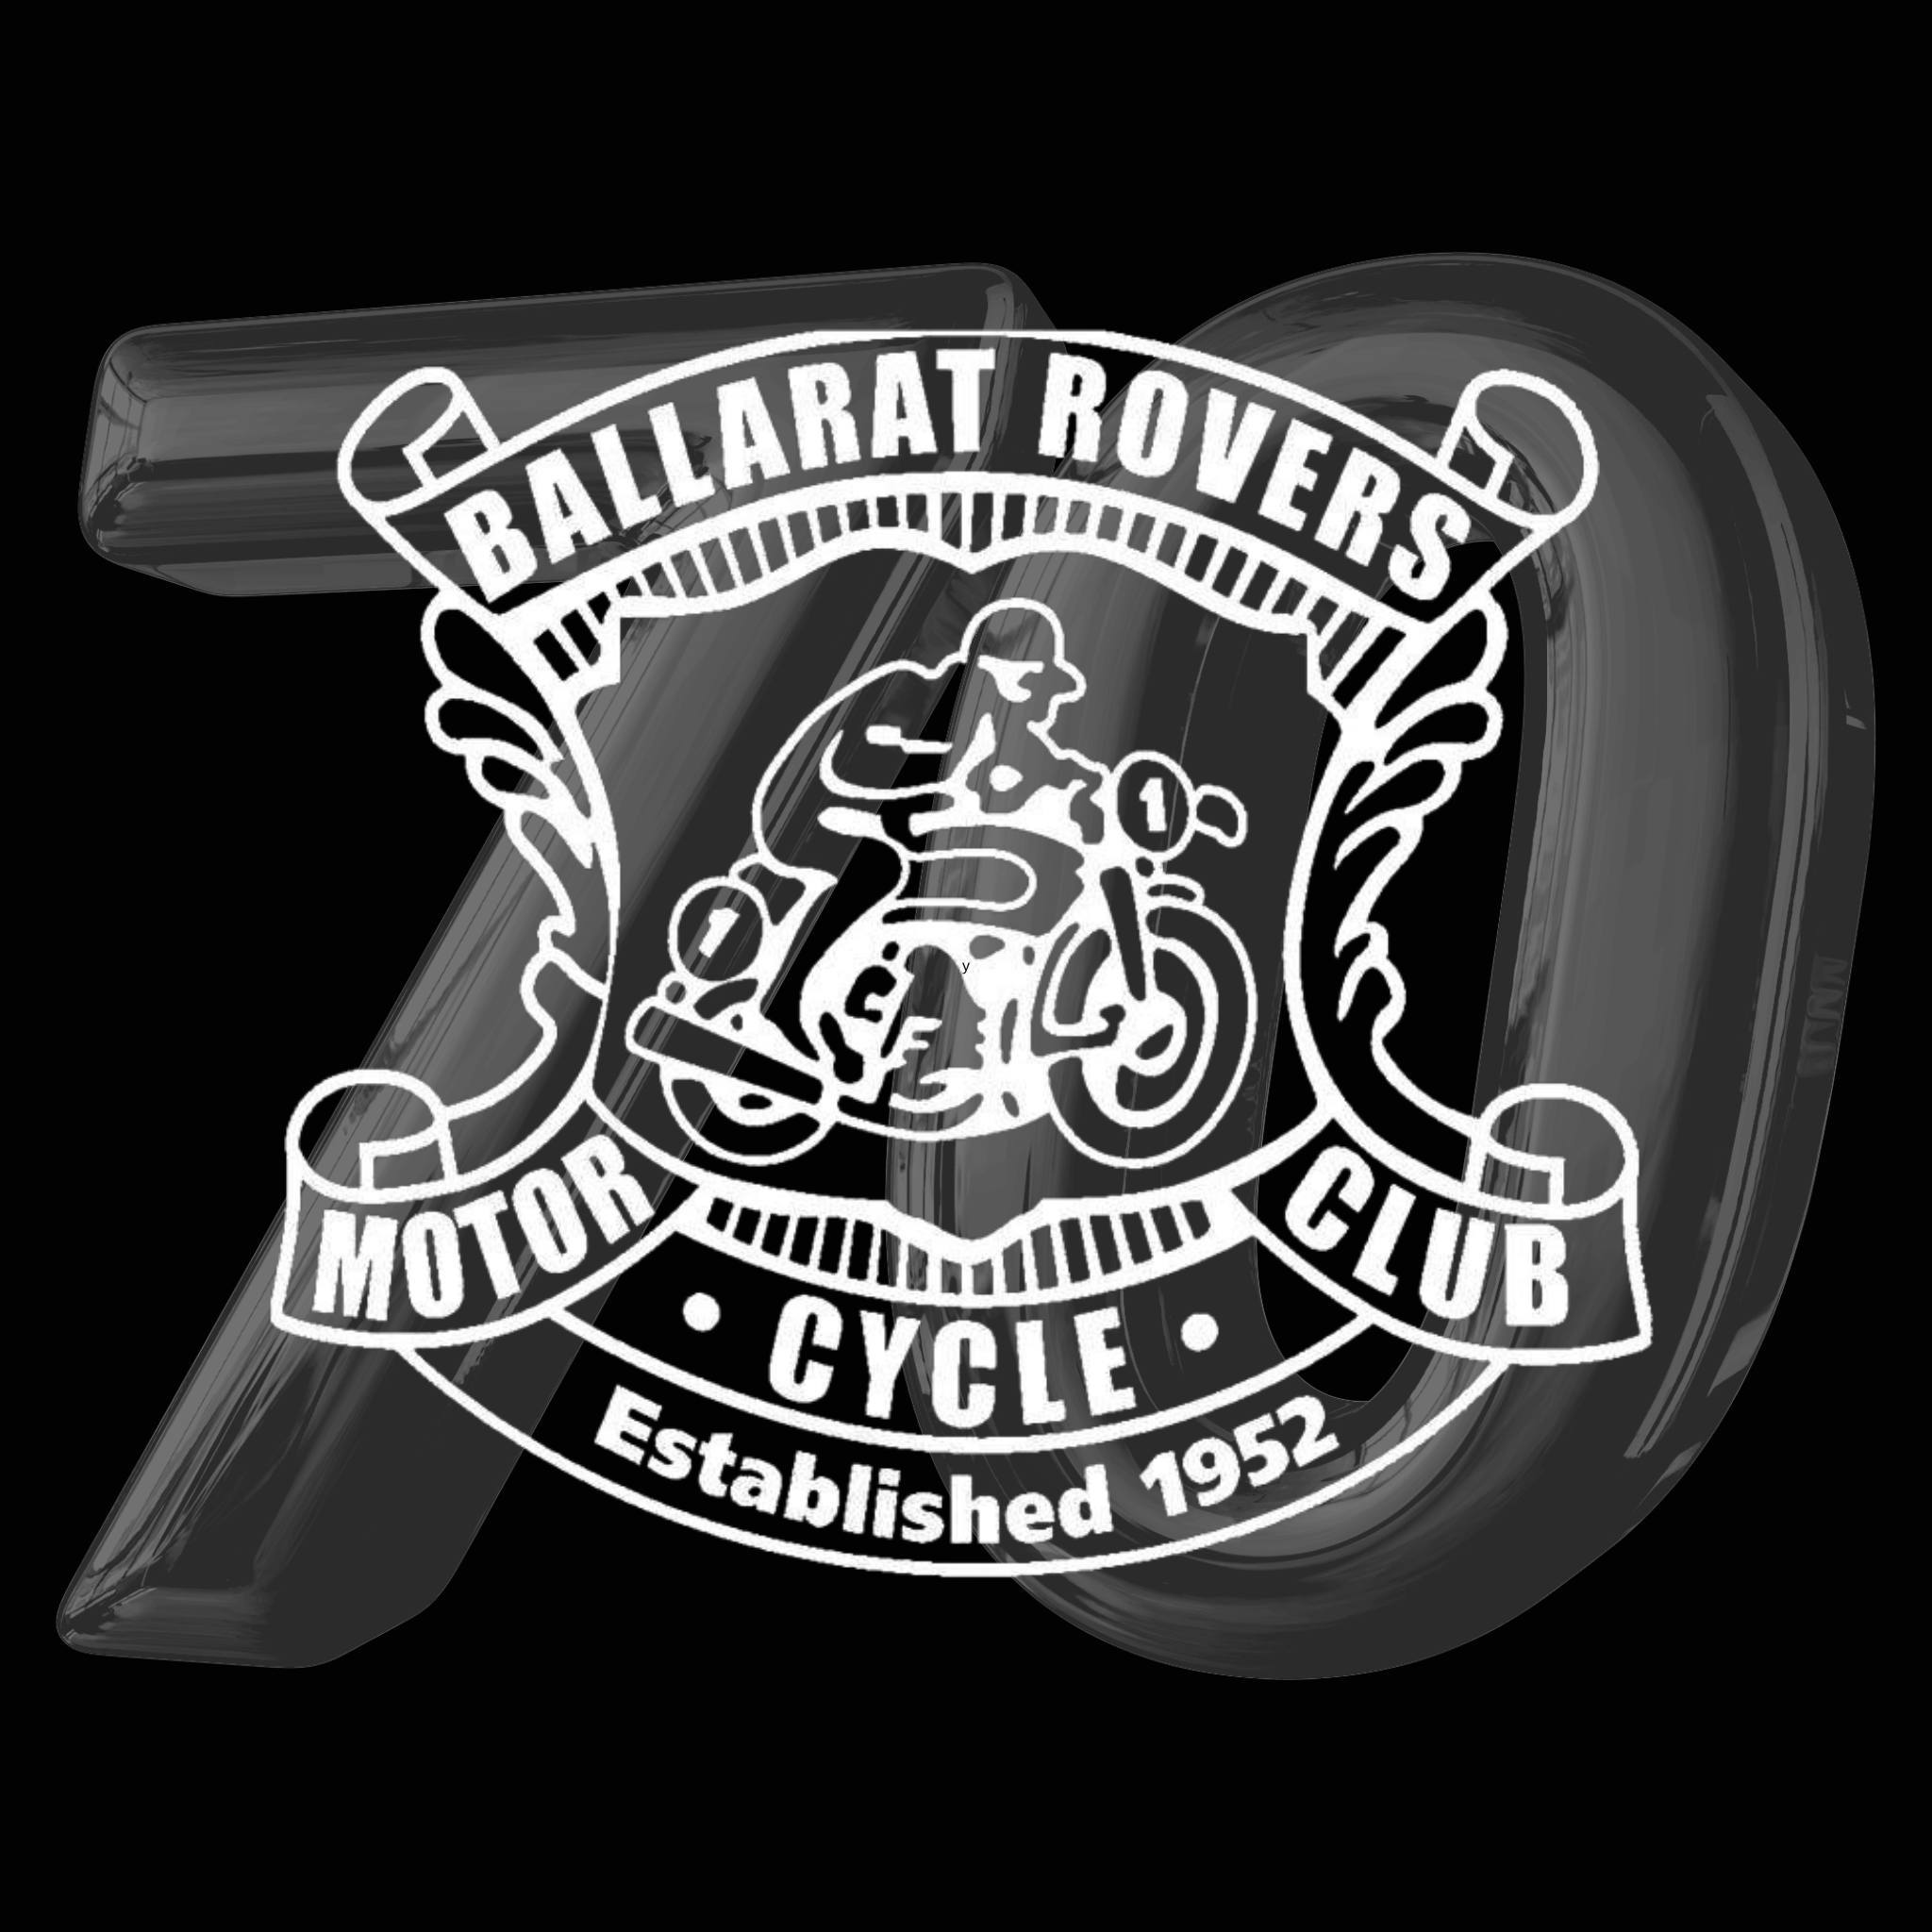 Ballarat Rovers Motor Cycle Club